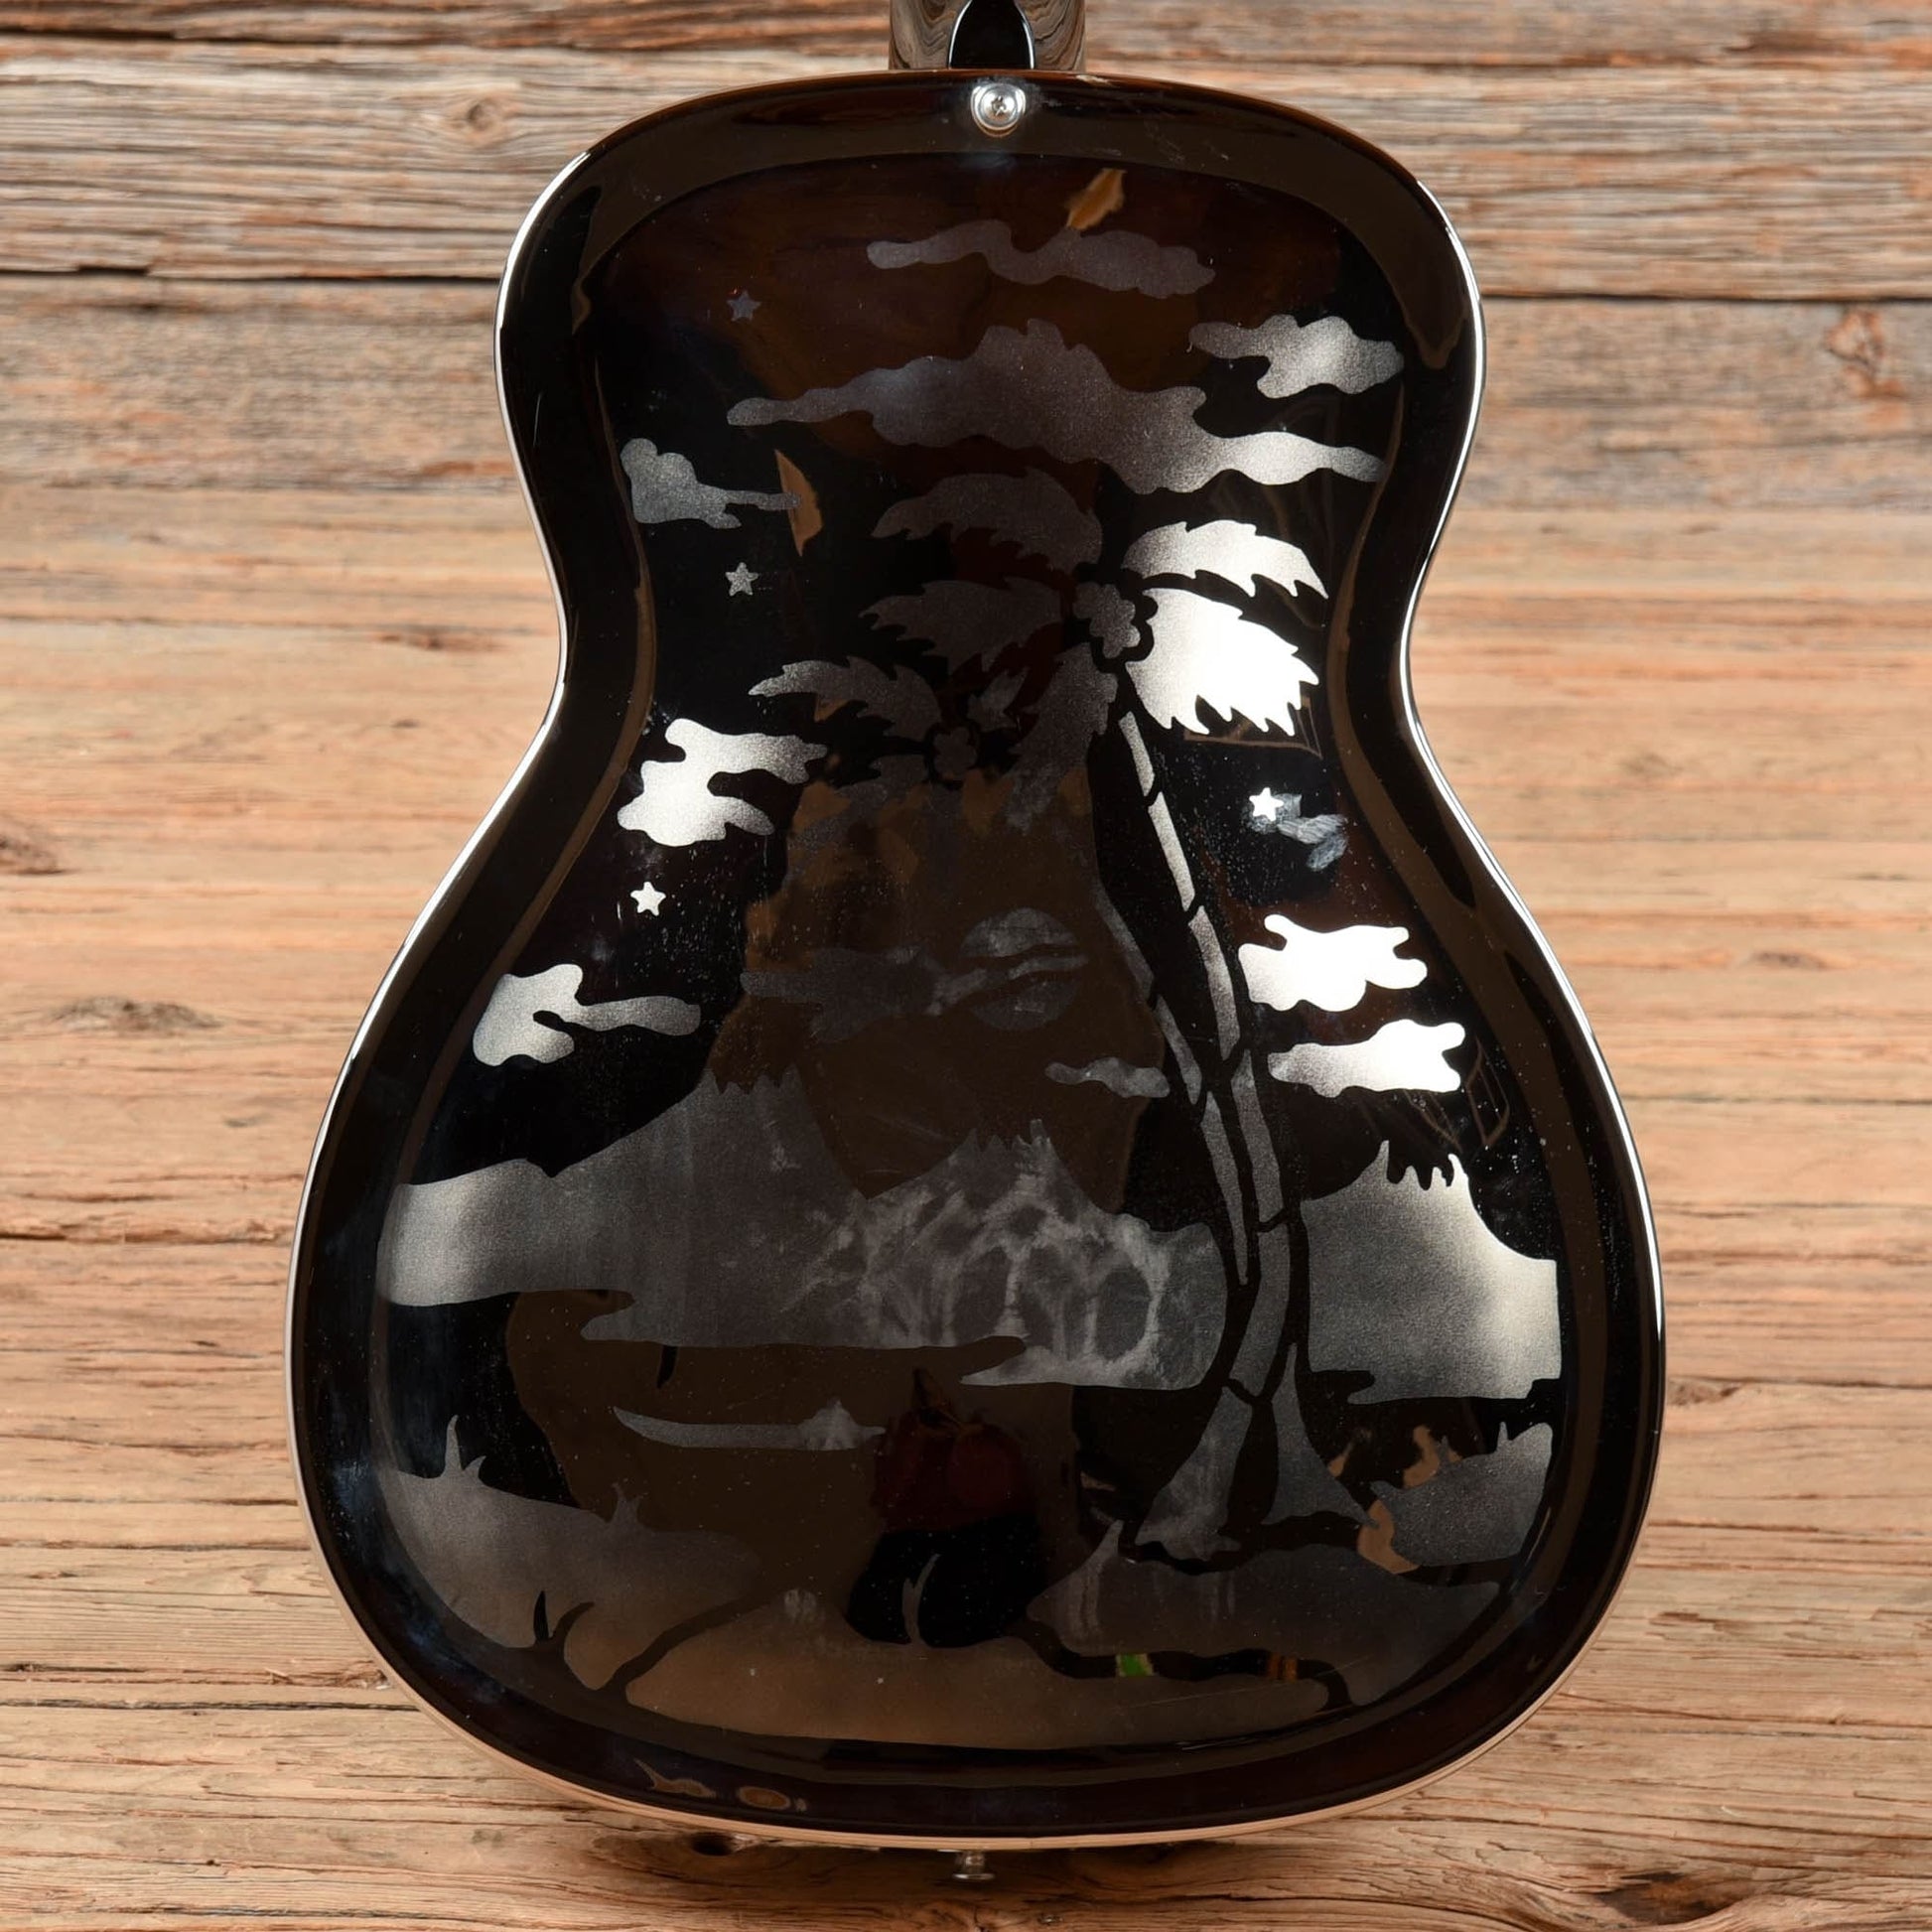 Dobro DM33 Polished Metal Acoustic Guitars / Resonator